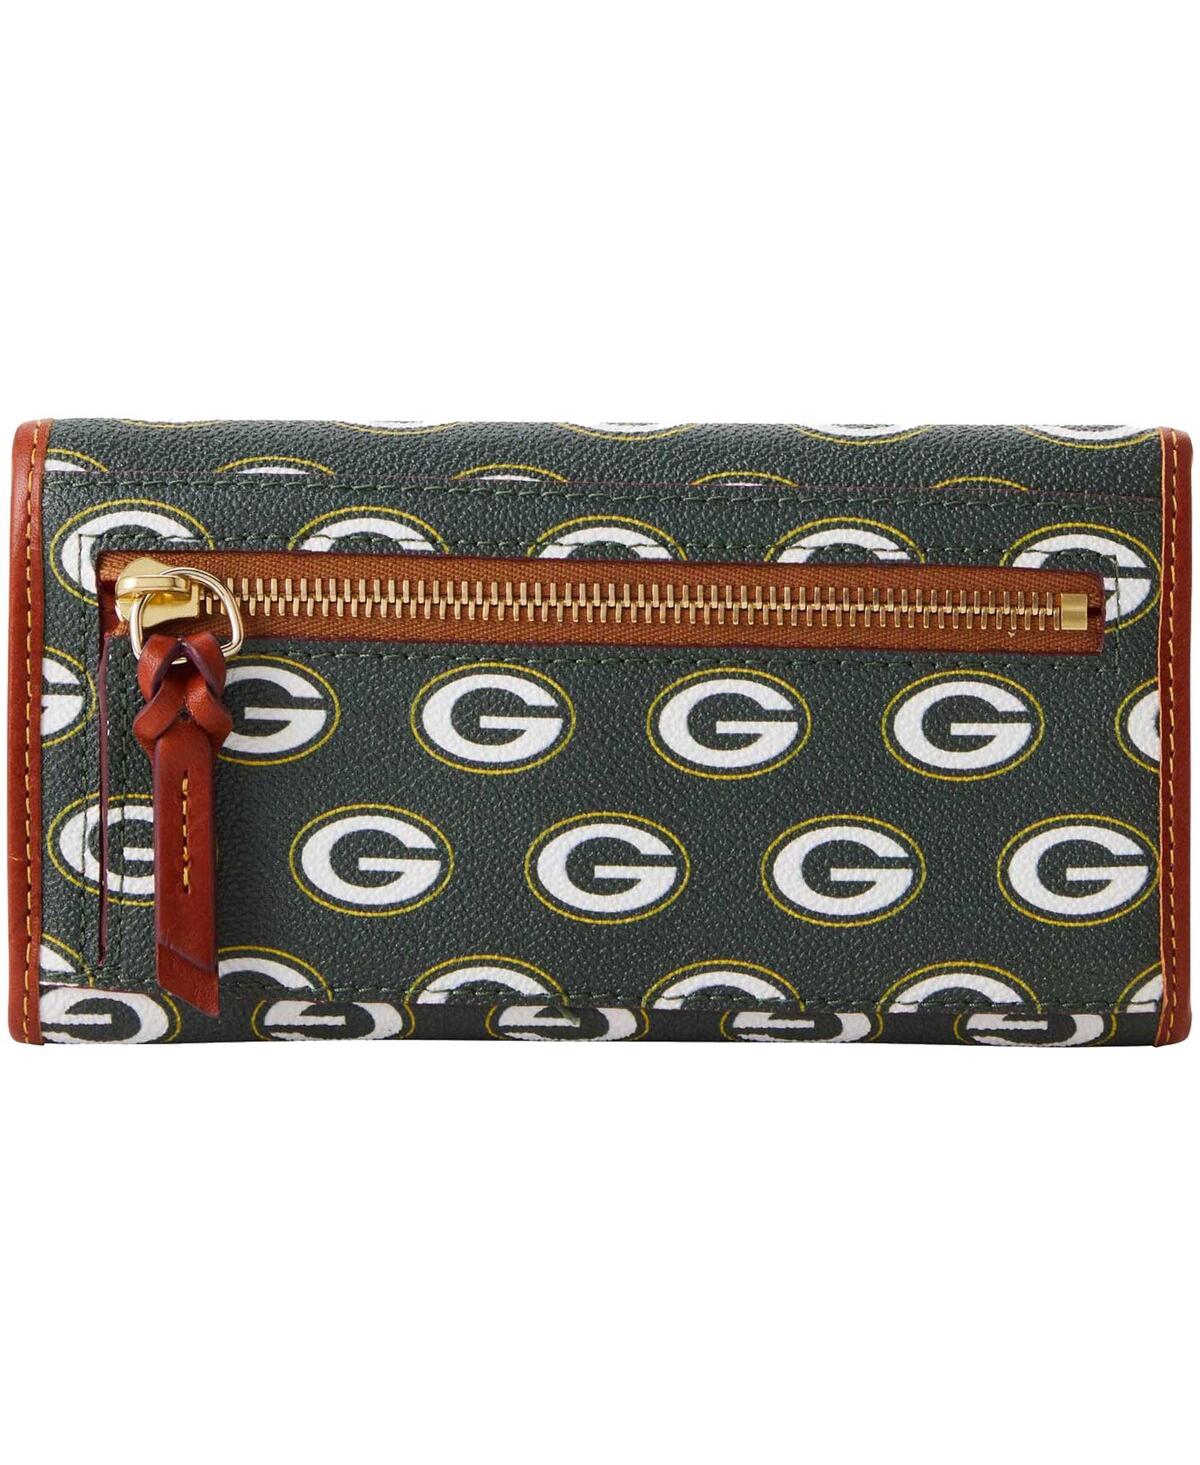 Shop Dooney & Bourke Women's  Green Bay Packers Continental Wallet